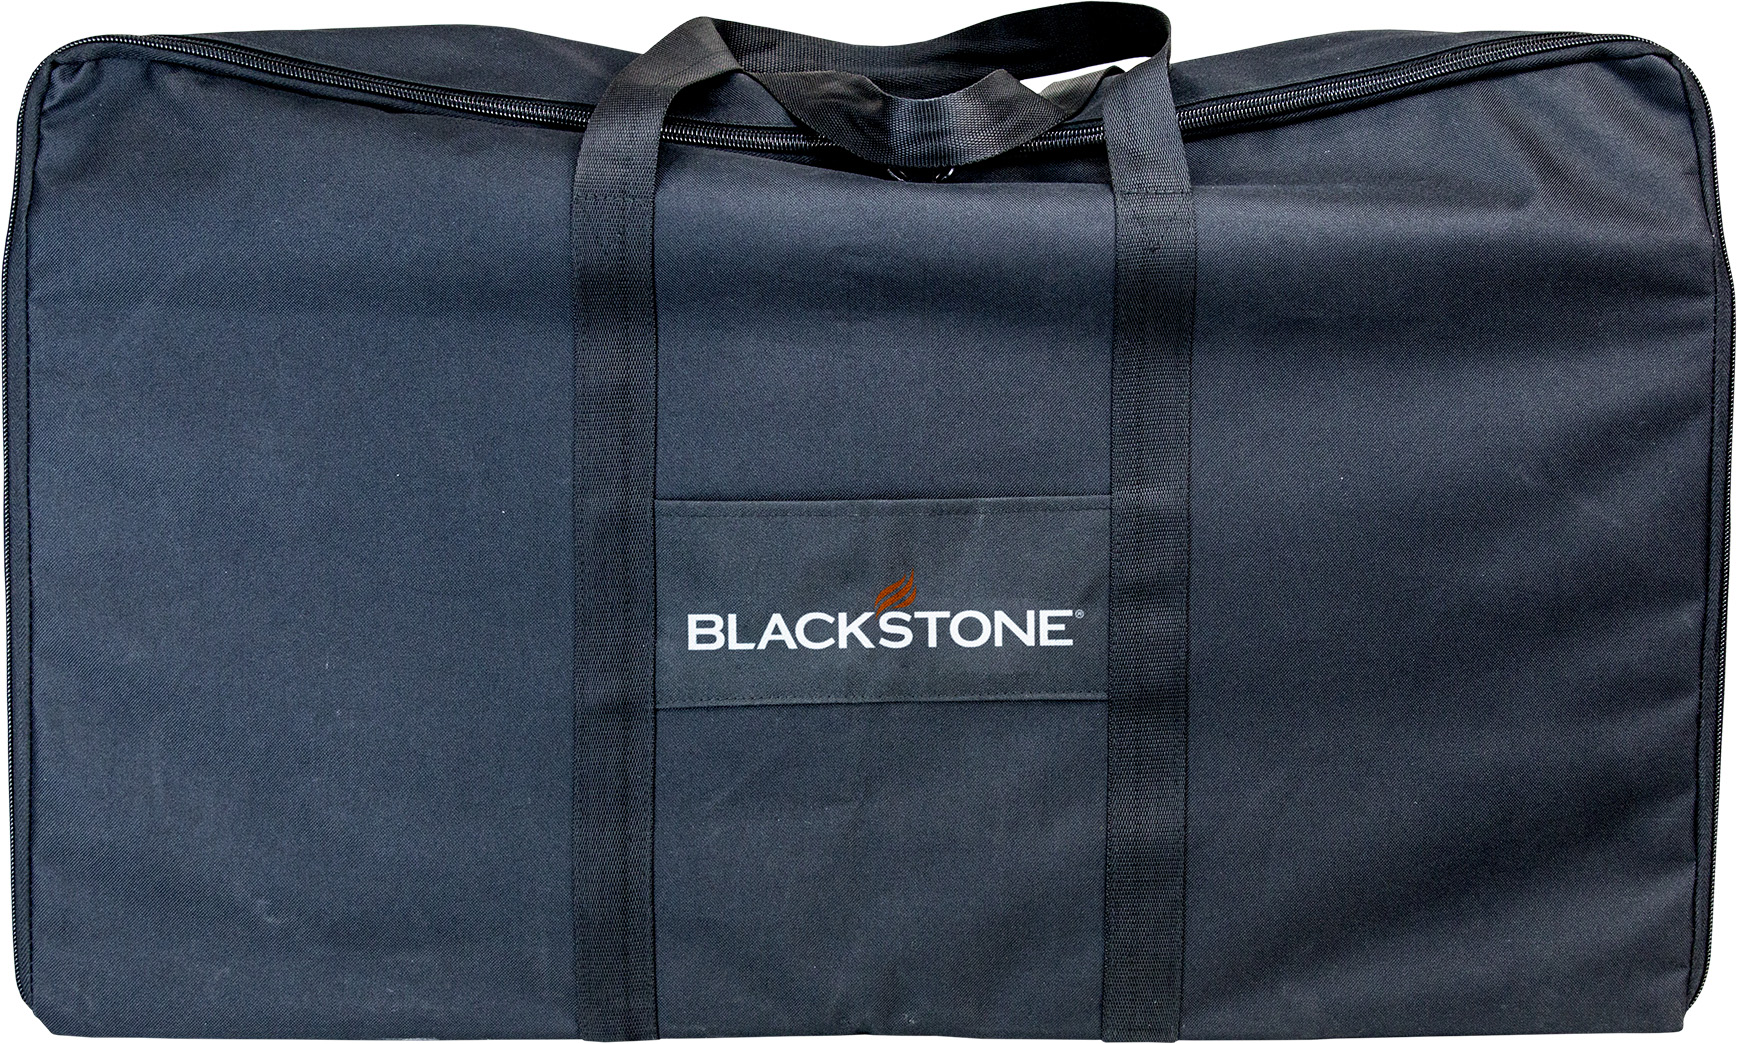 Blackstone Tailgater Combo Carry Bag Set - Walmart.com